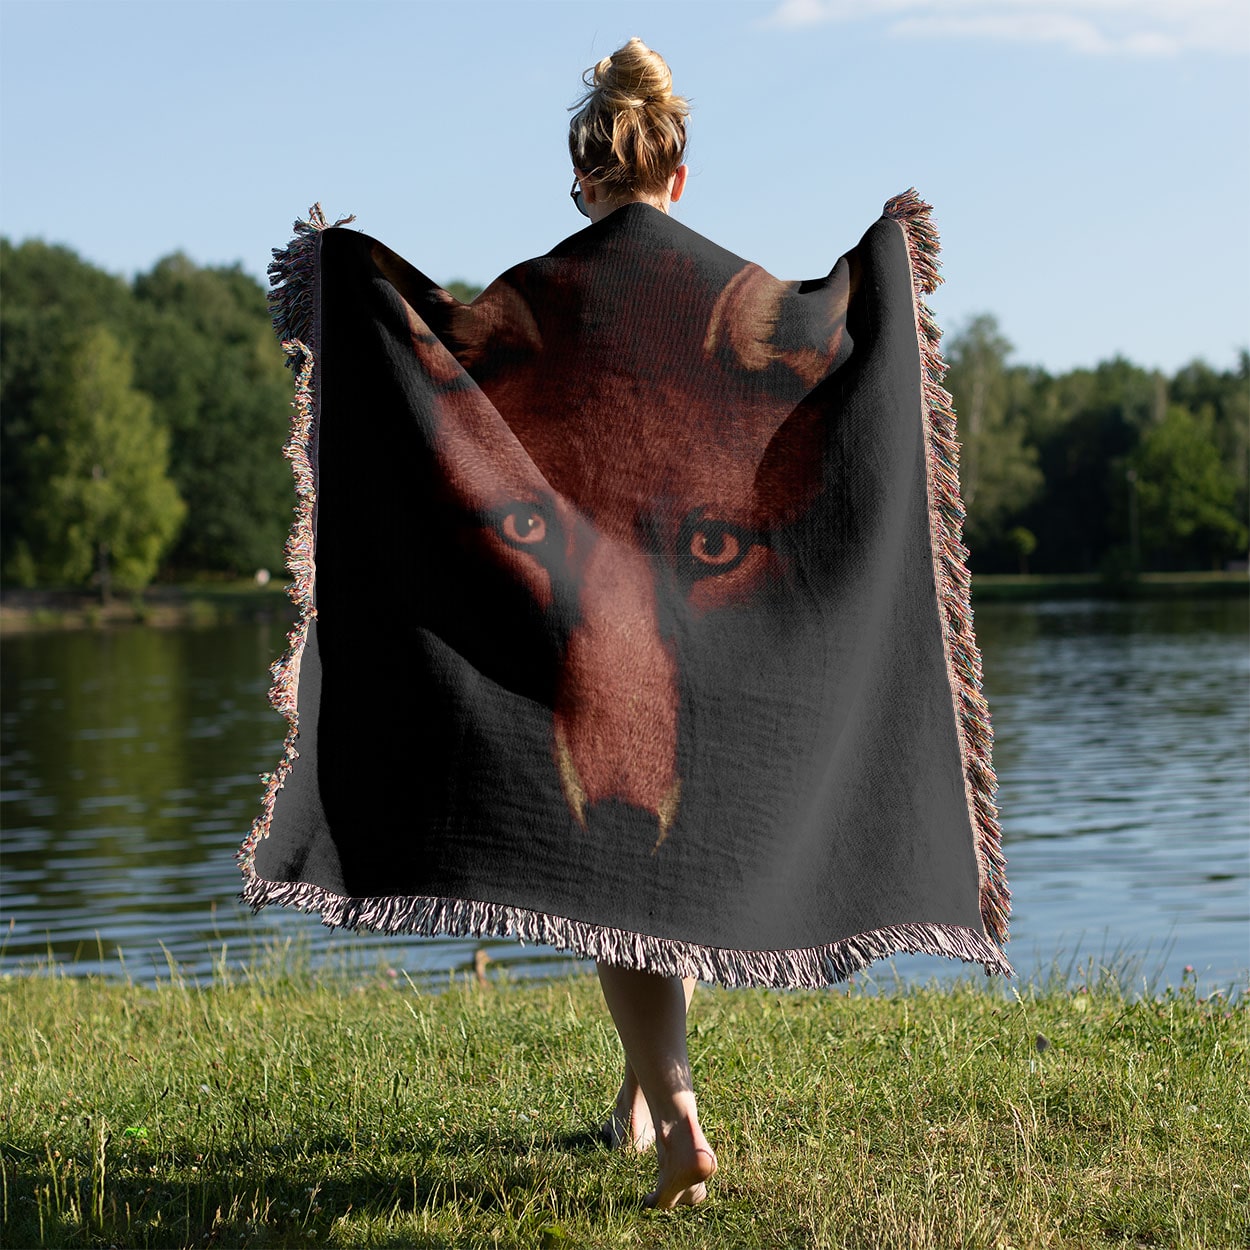 Animal Portrait Woven Blanket Held on a Woman's Back Outside